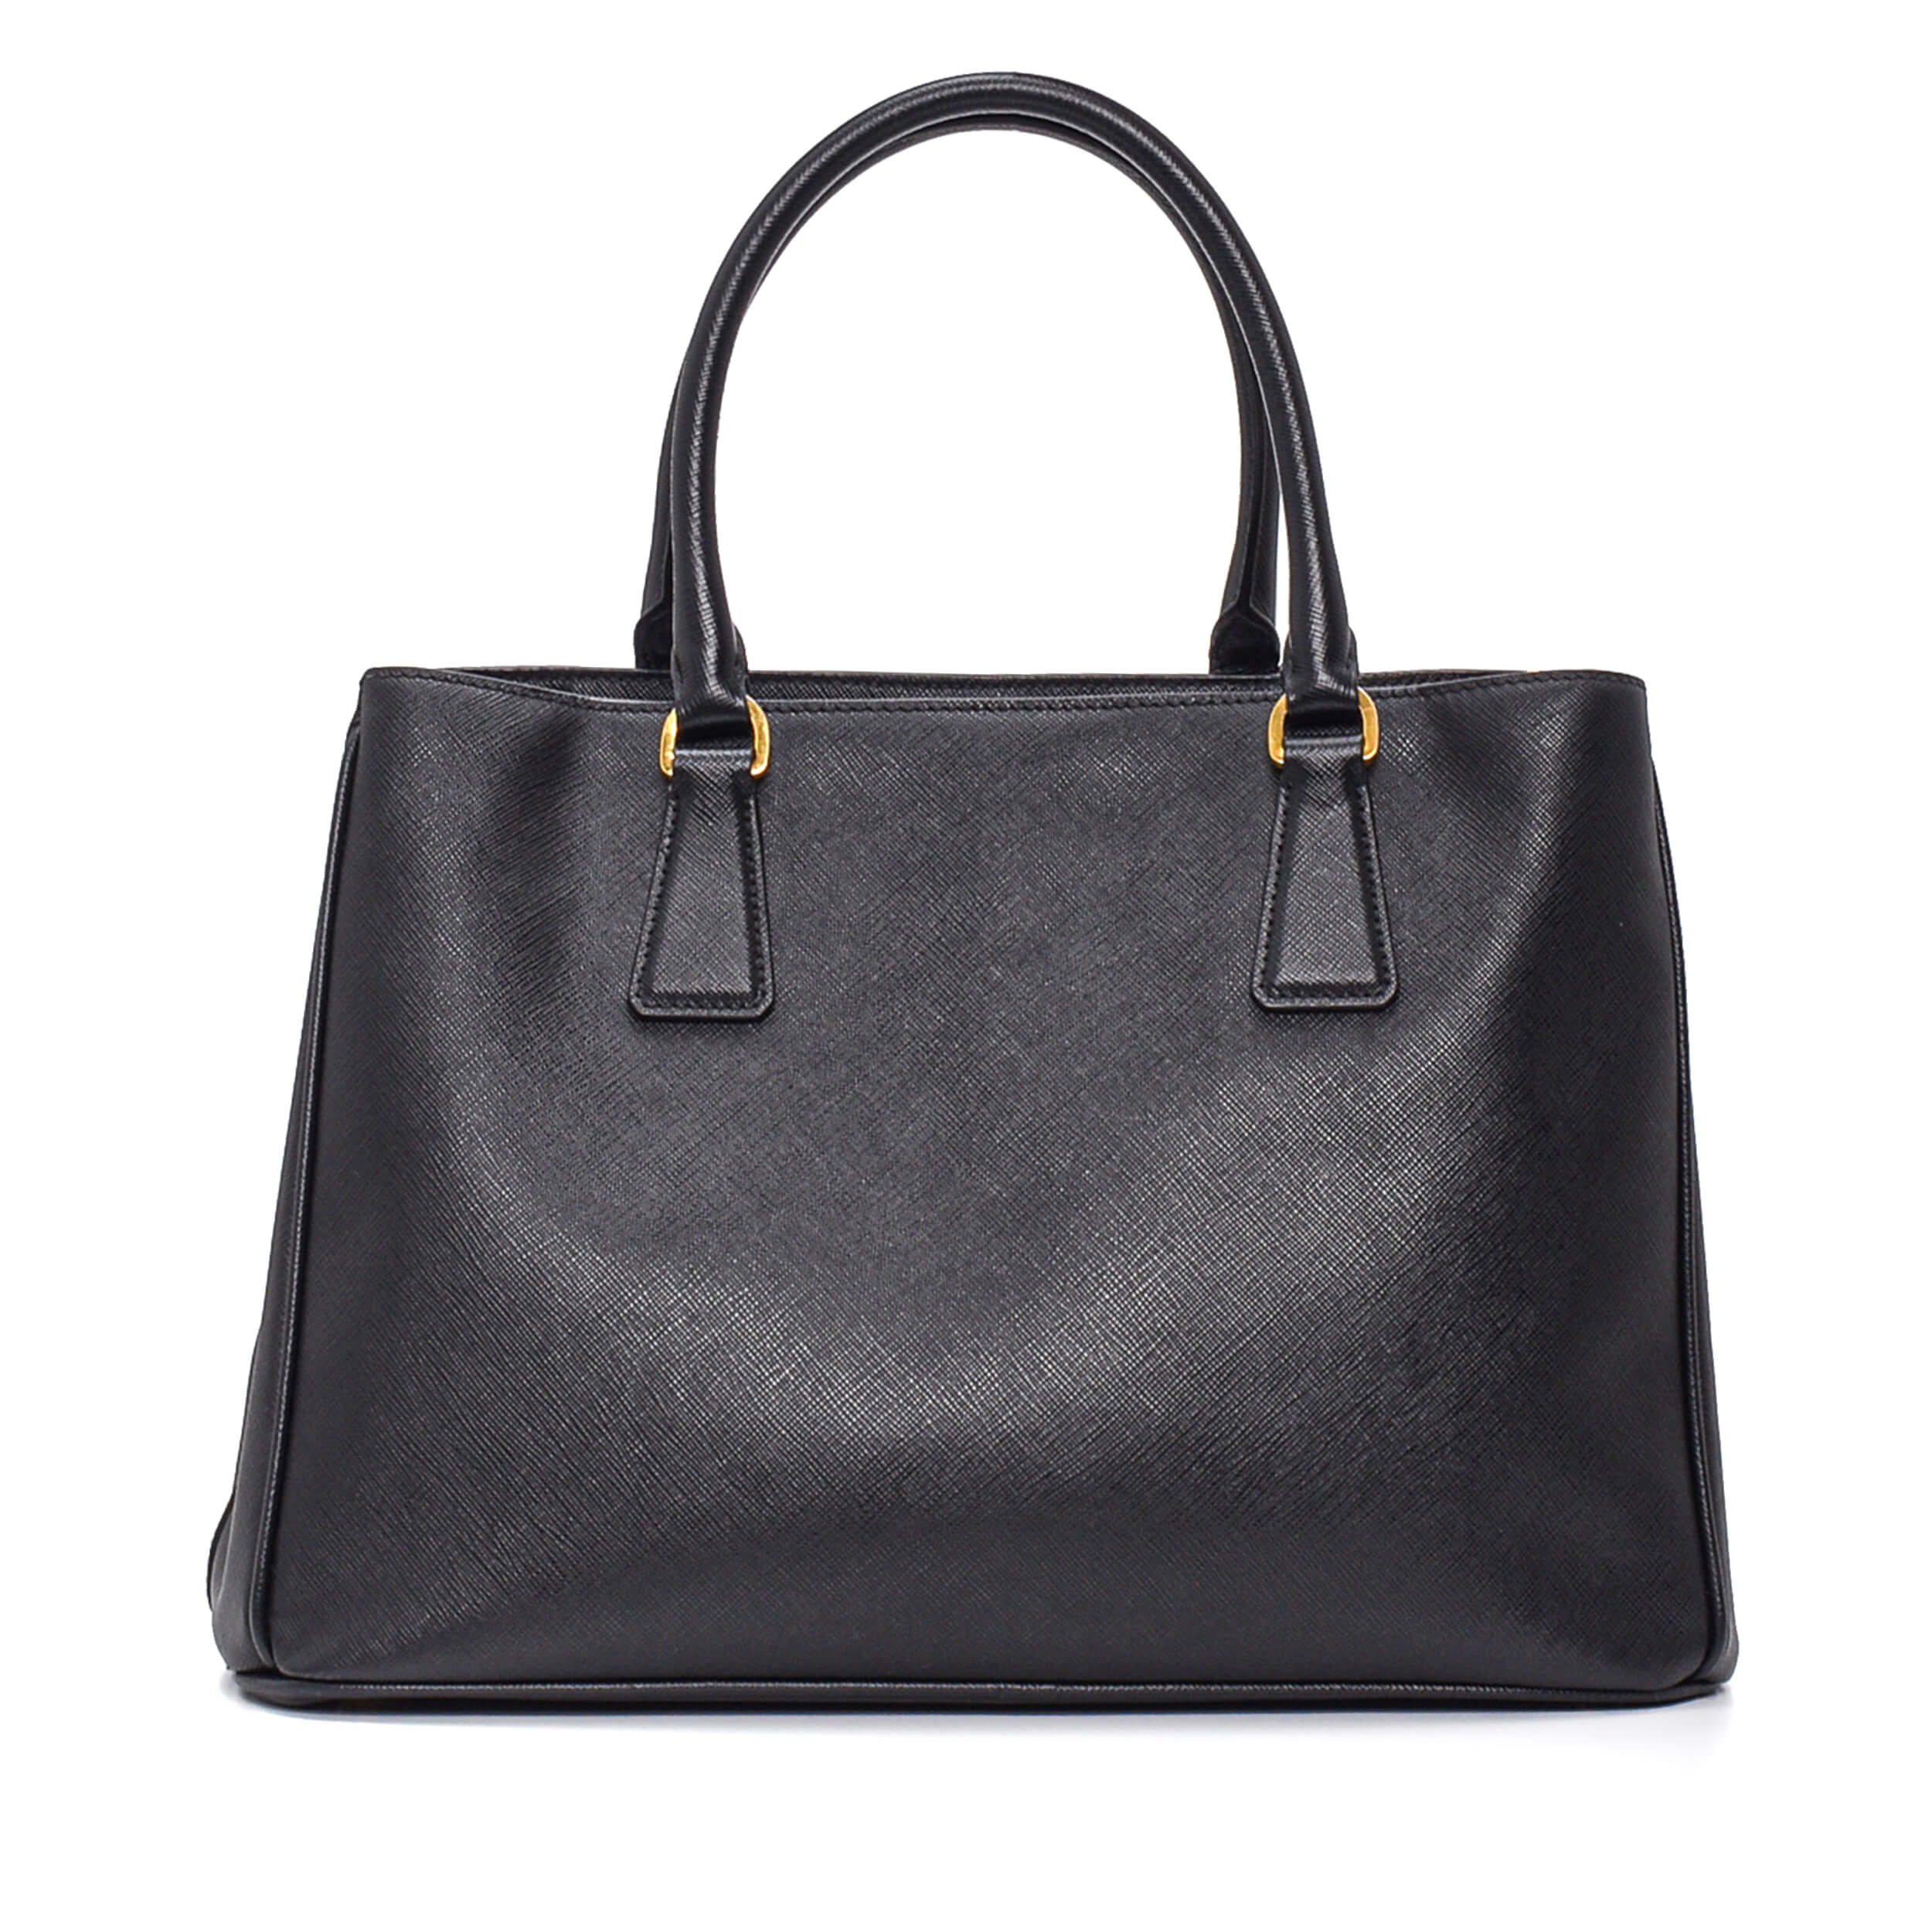 Prada - Black Saffiano Leather Small Galleria Bag